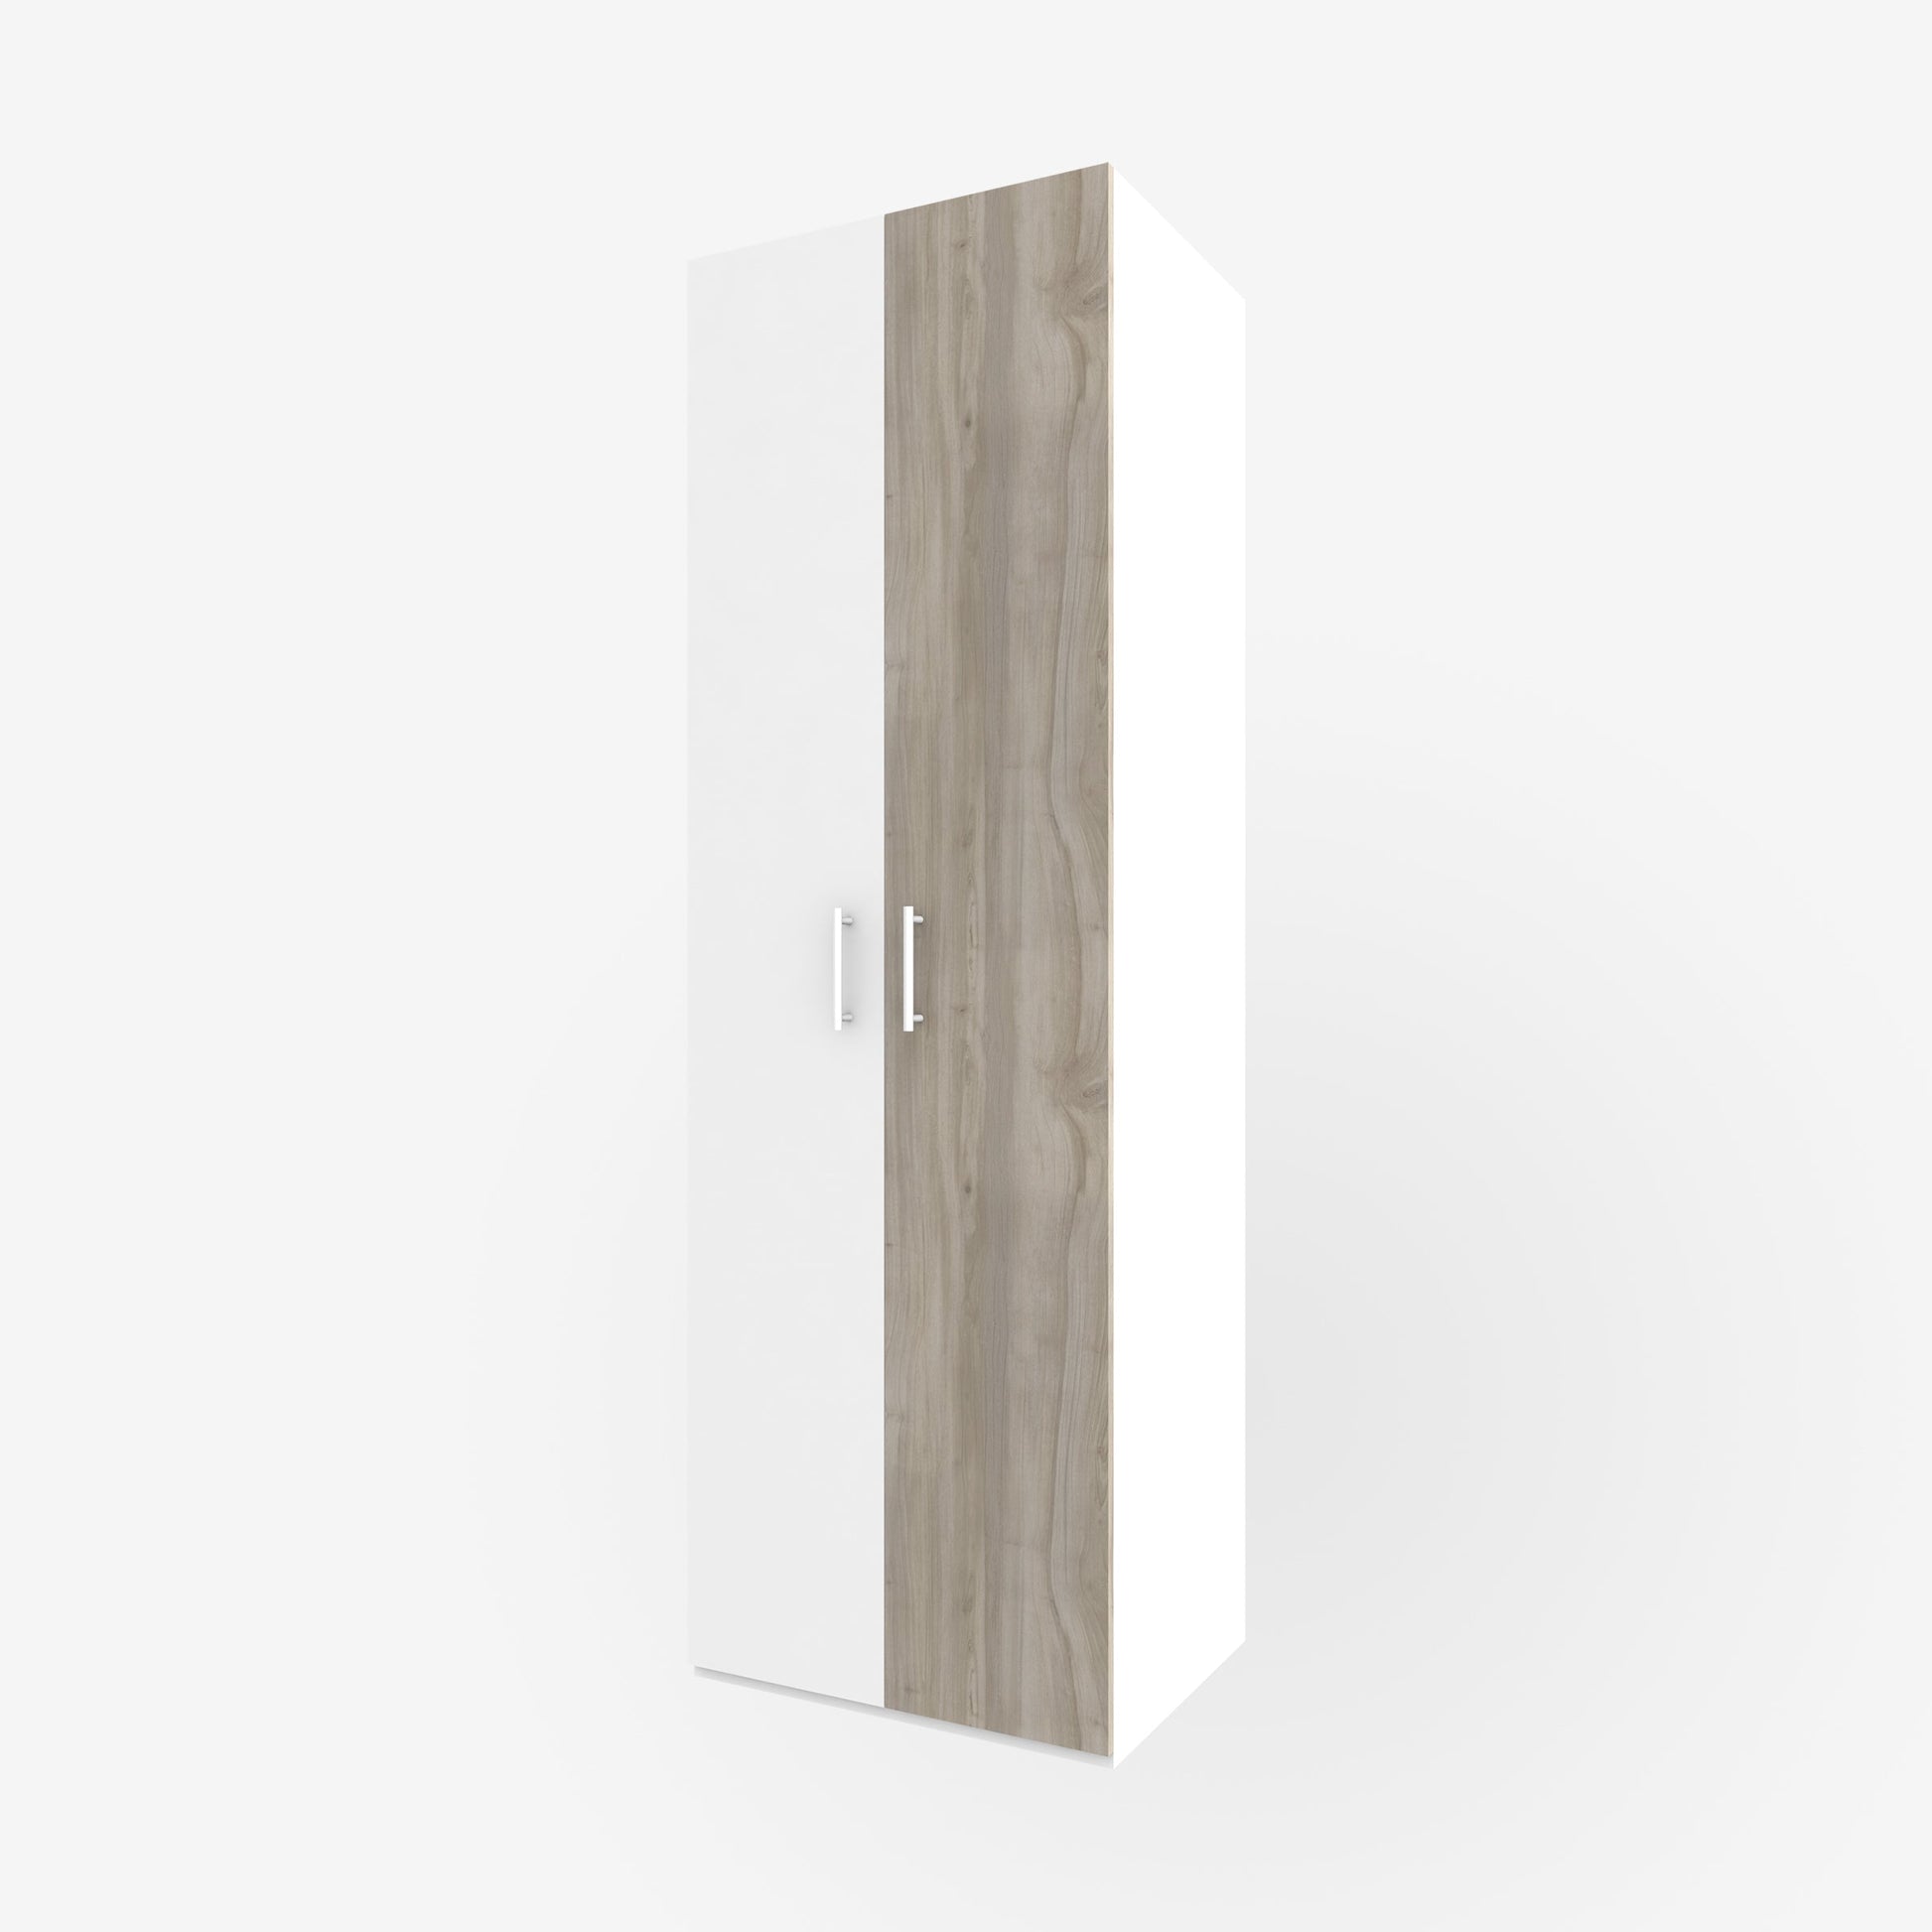 15" x 93" light wood tone silverwood slab door for Ikea or Swedeboxx pax closet cabinet